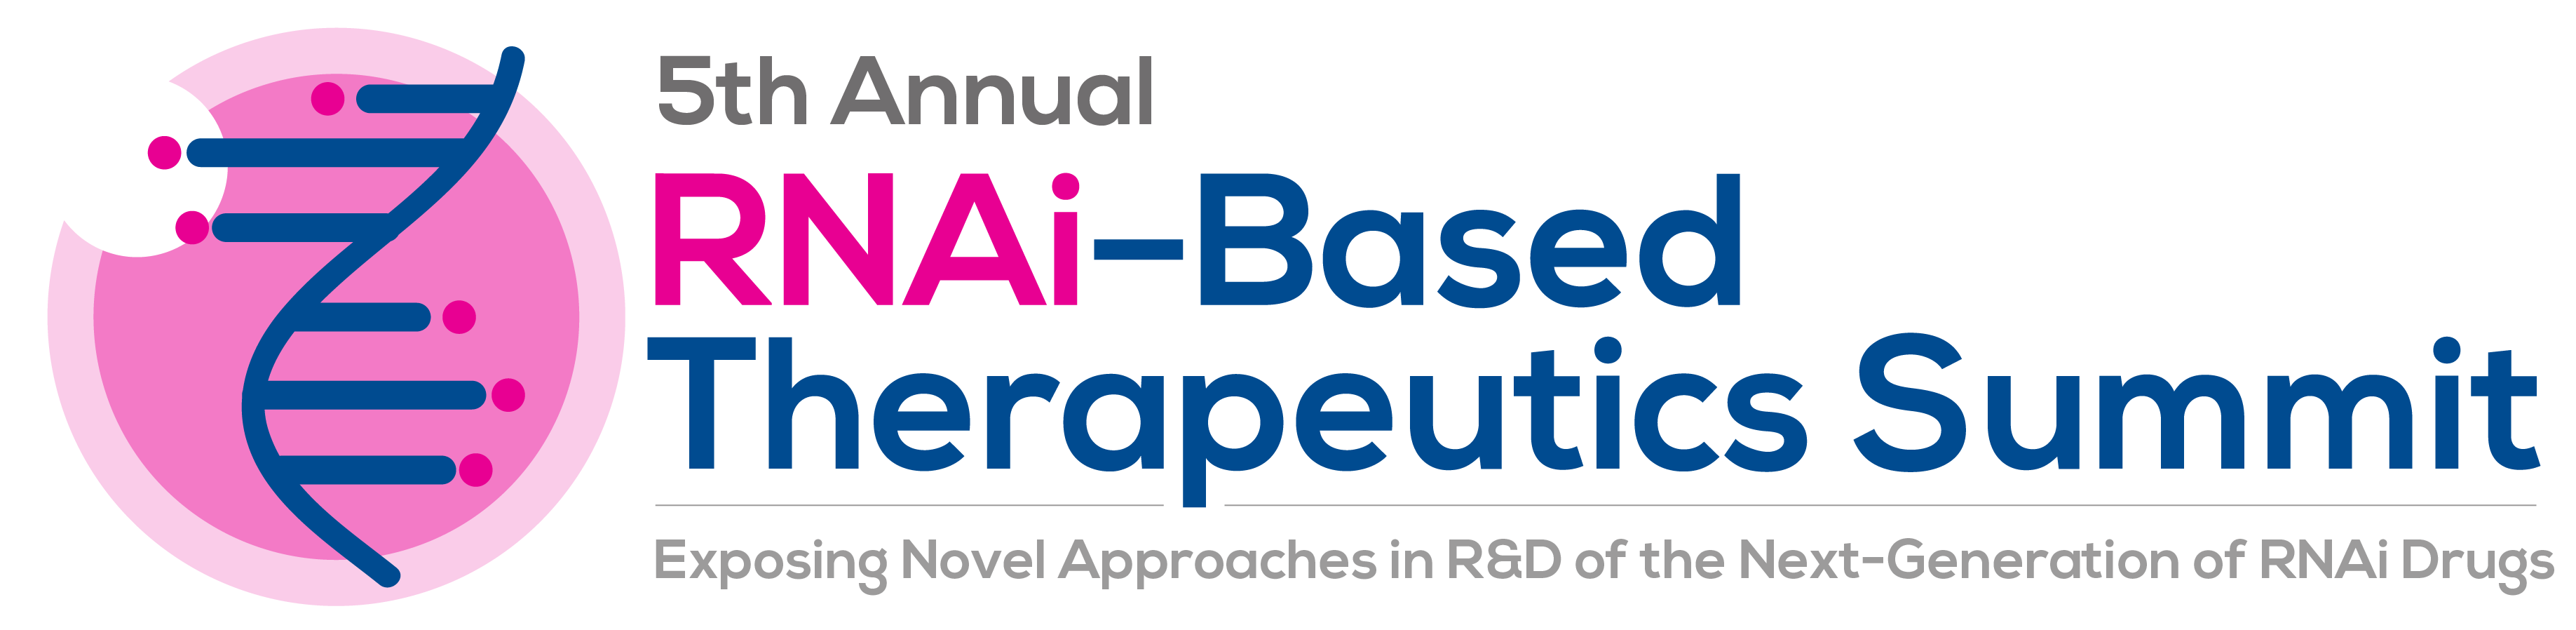 5th RNAi - Based Therapeutics Summit logo